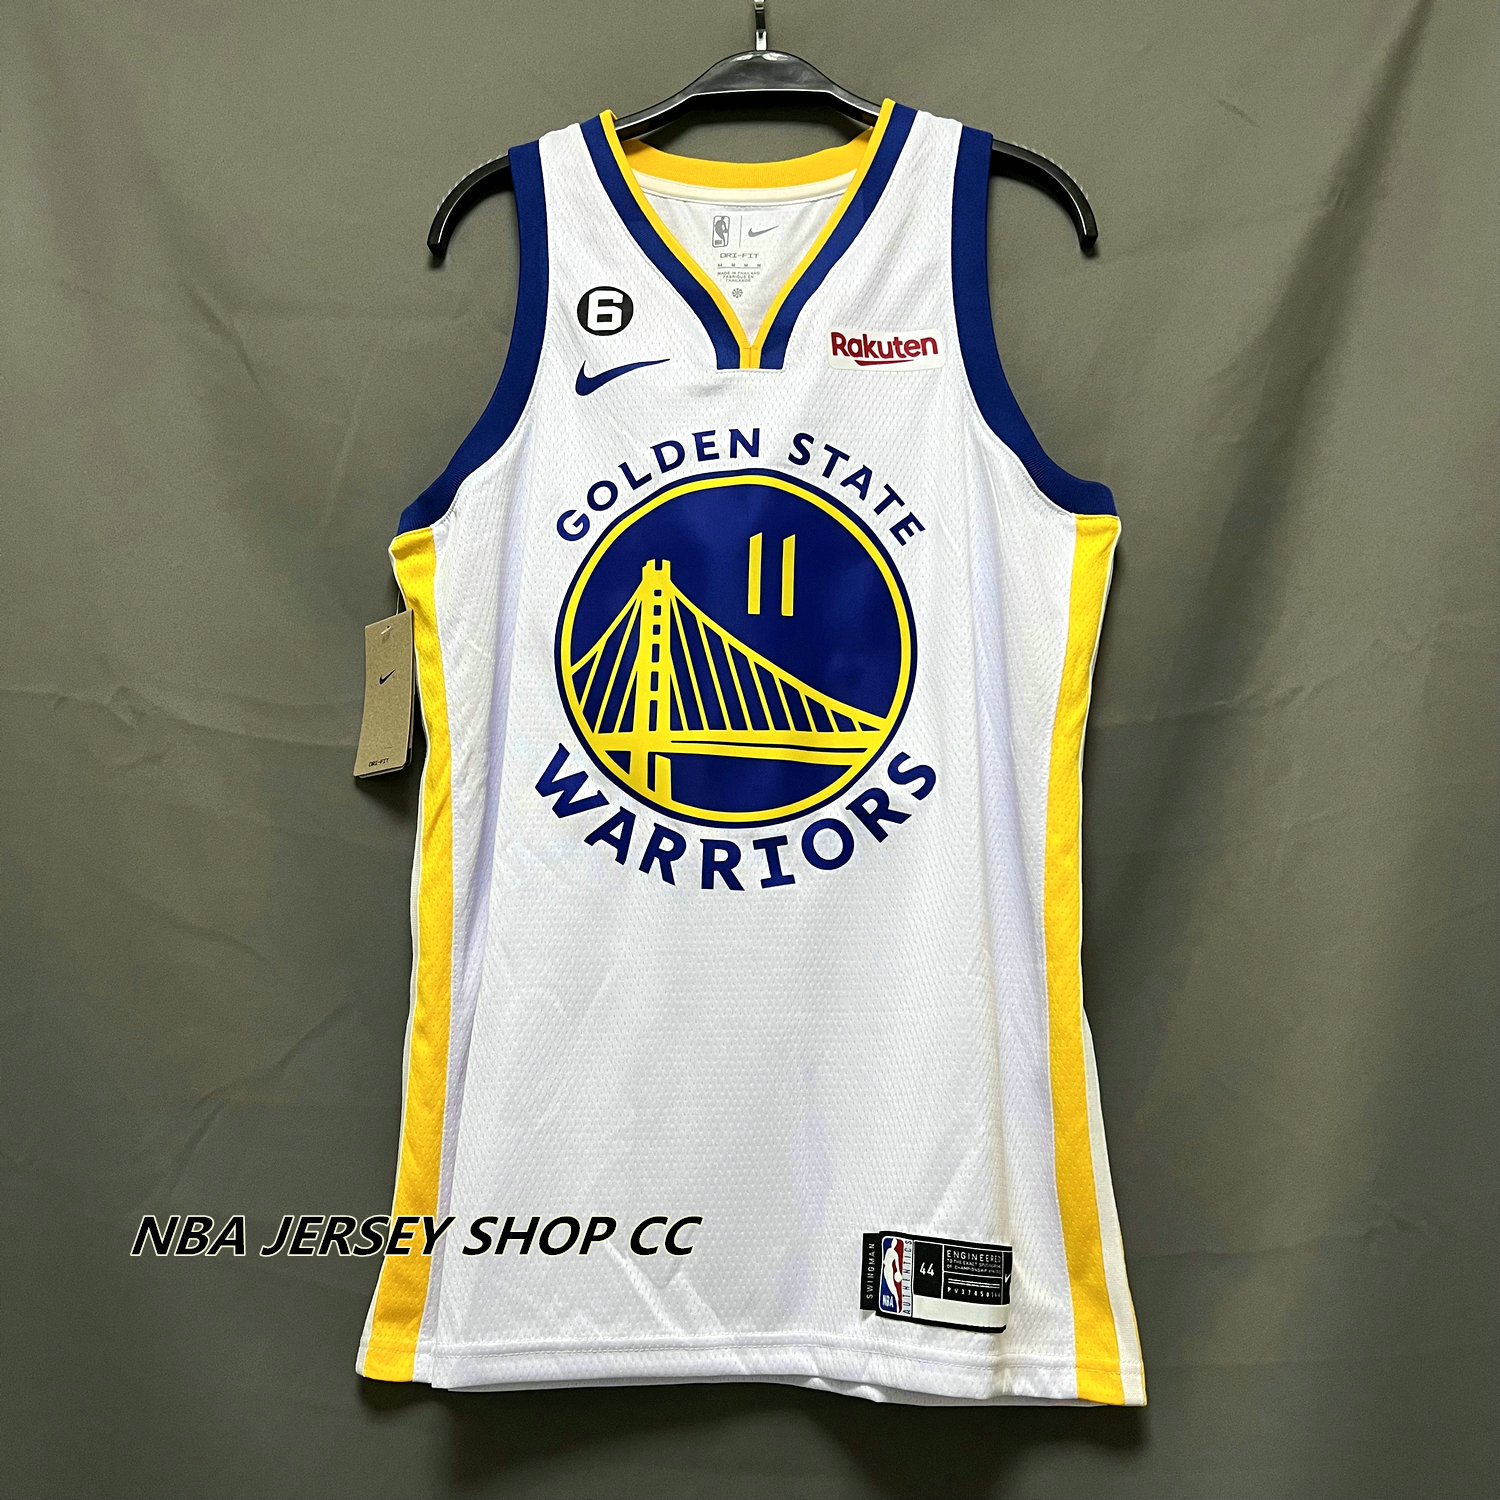 Golden State Warriors Steph Curry Association Edition Jersey